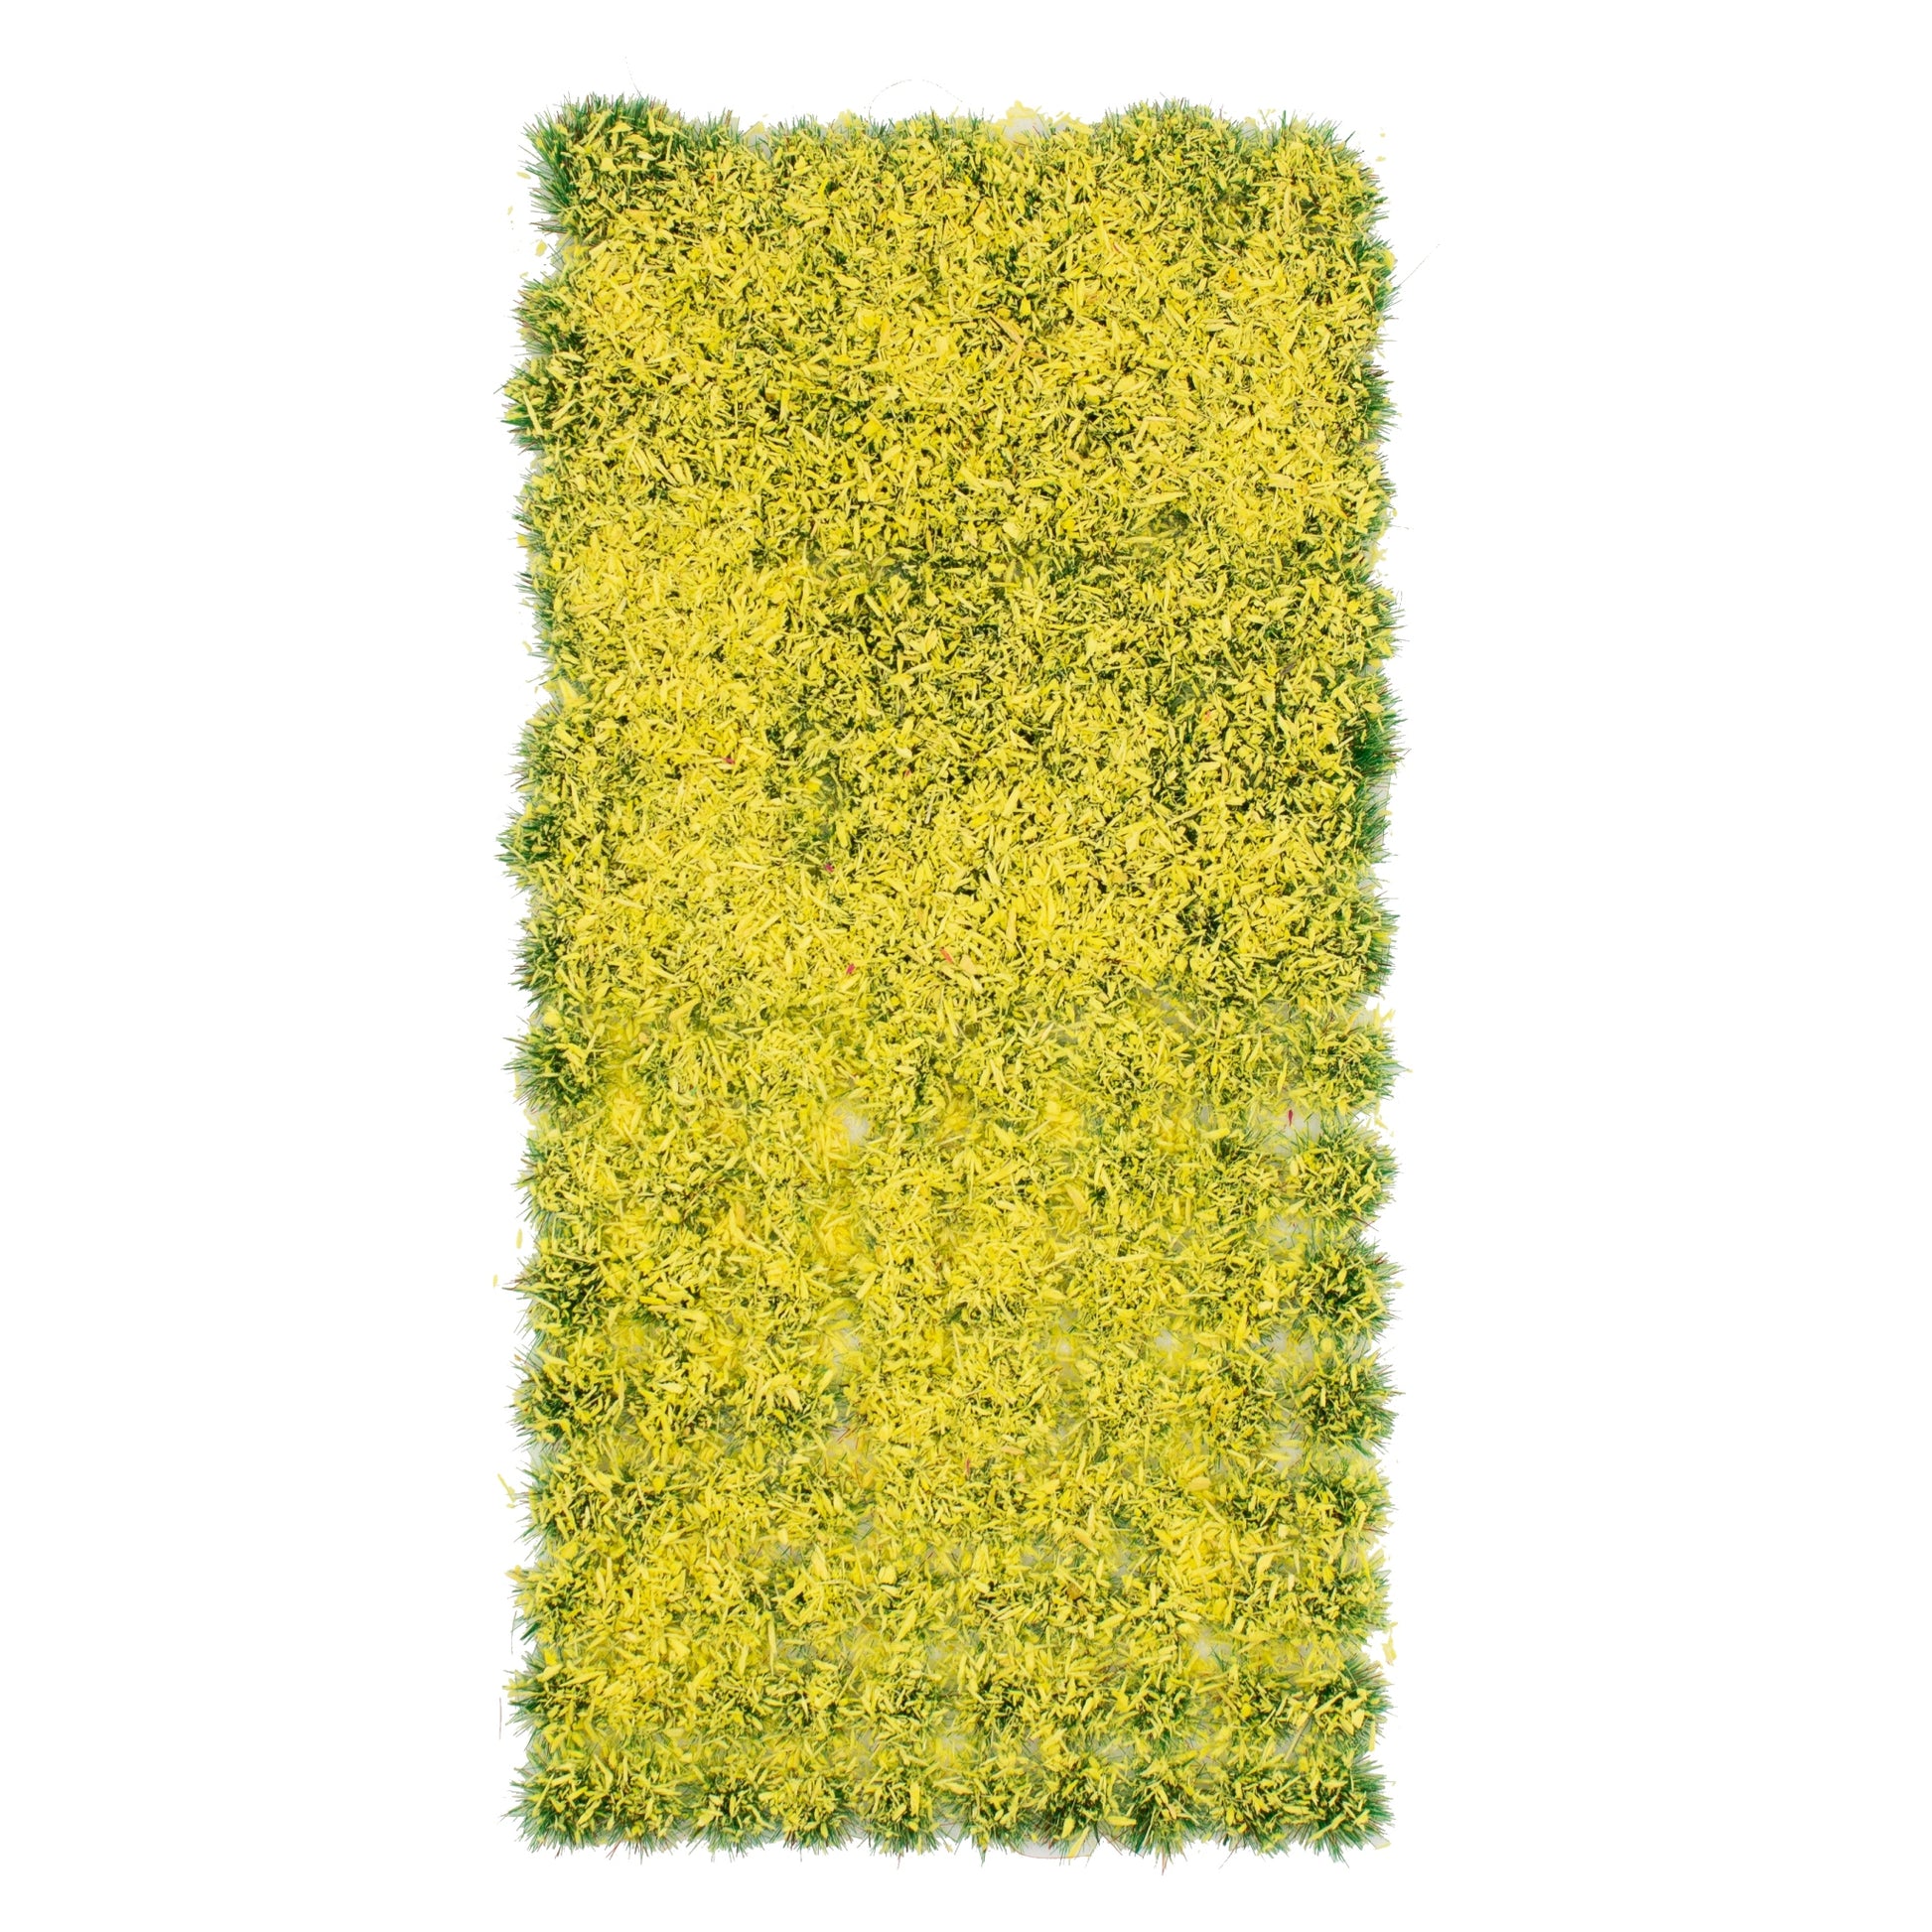 Flower Tufts - Daffodil Self Adhesive Flower Tufts (Copy) - Geek Gaming Scenics